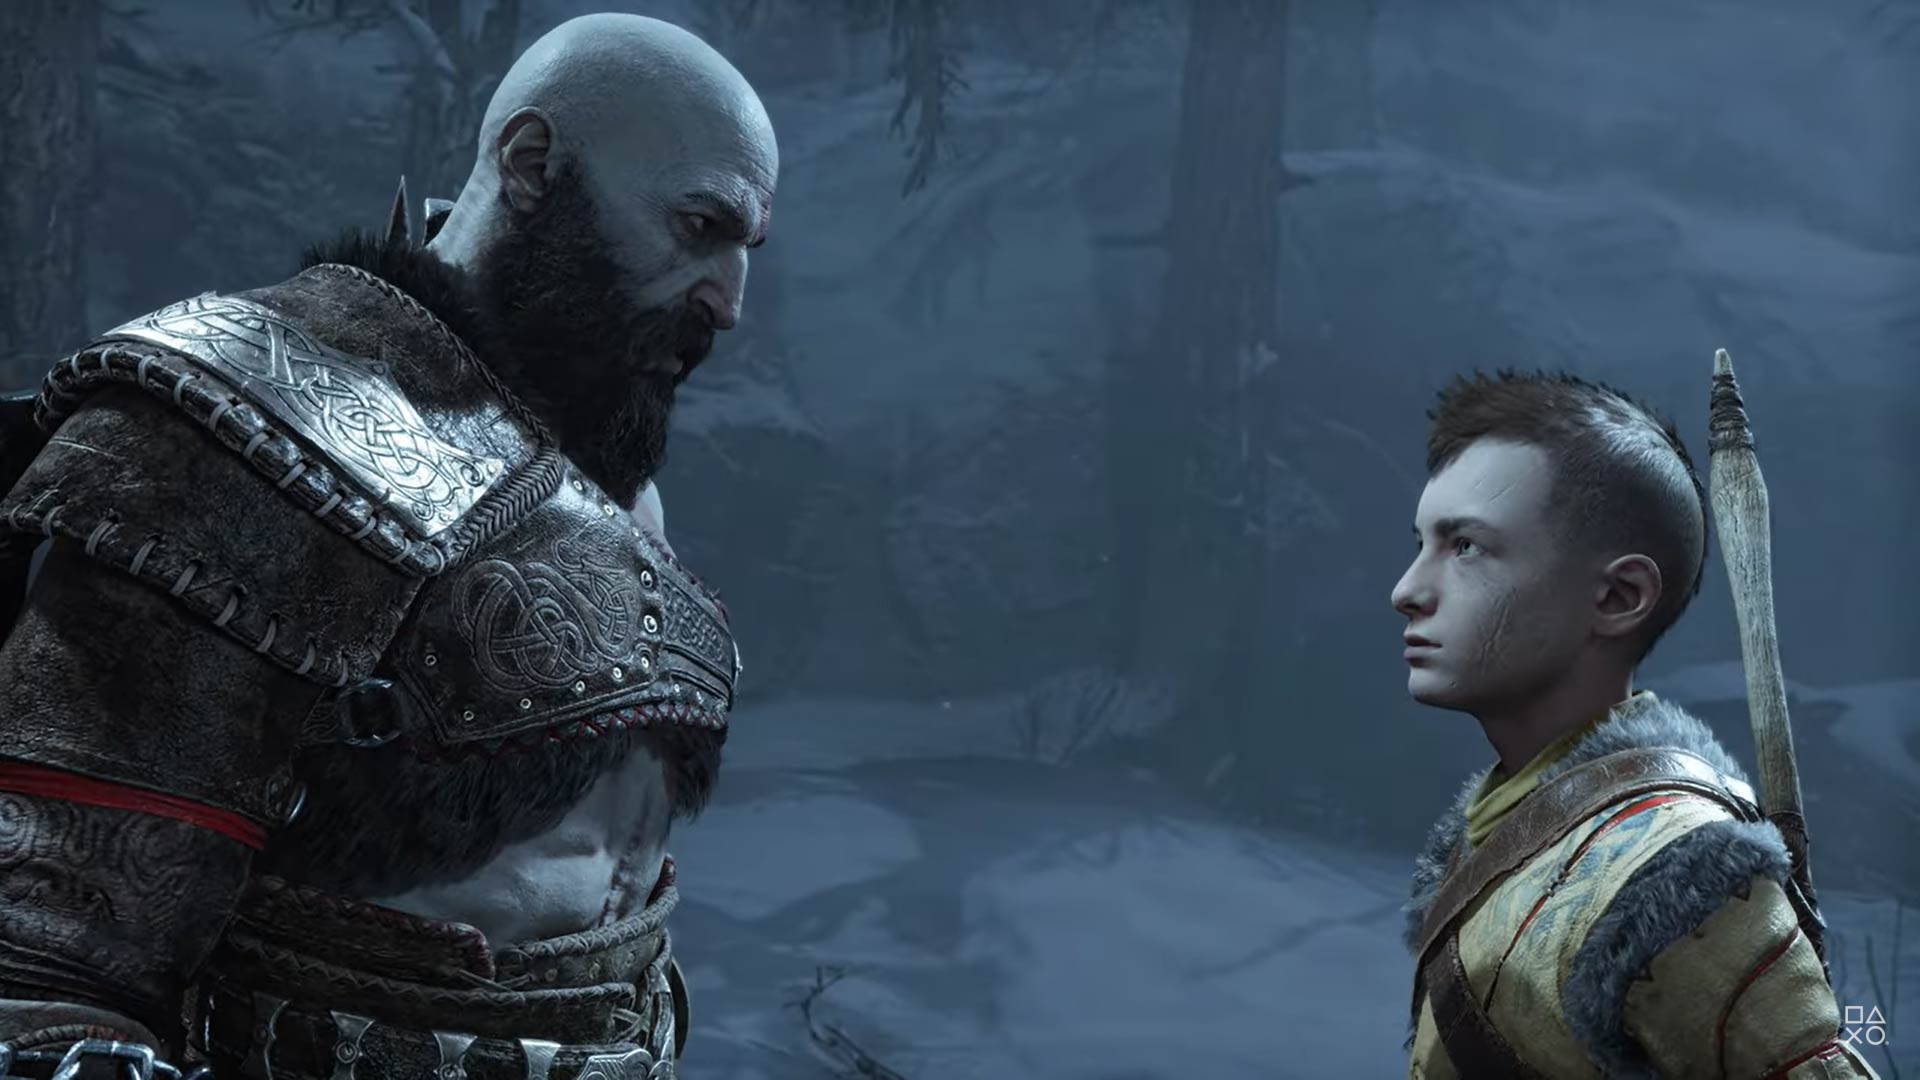 God of War Ragnarök story trailer debuts during PlayStation State of Play